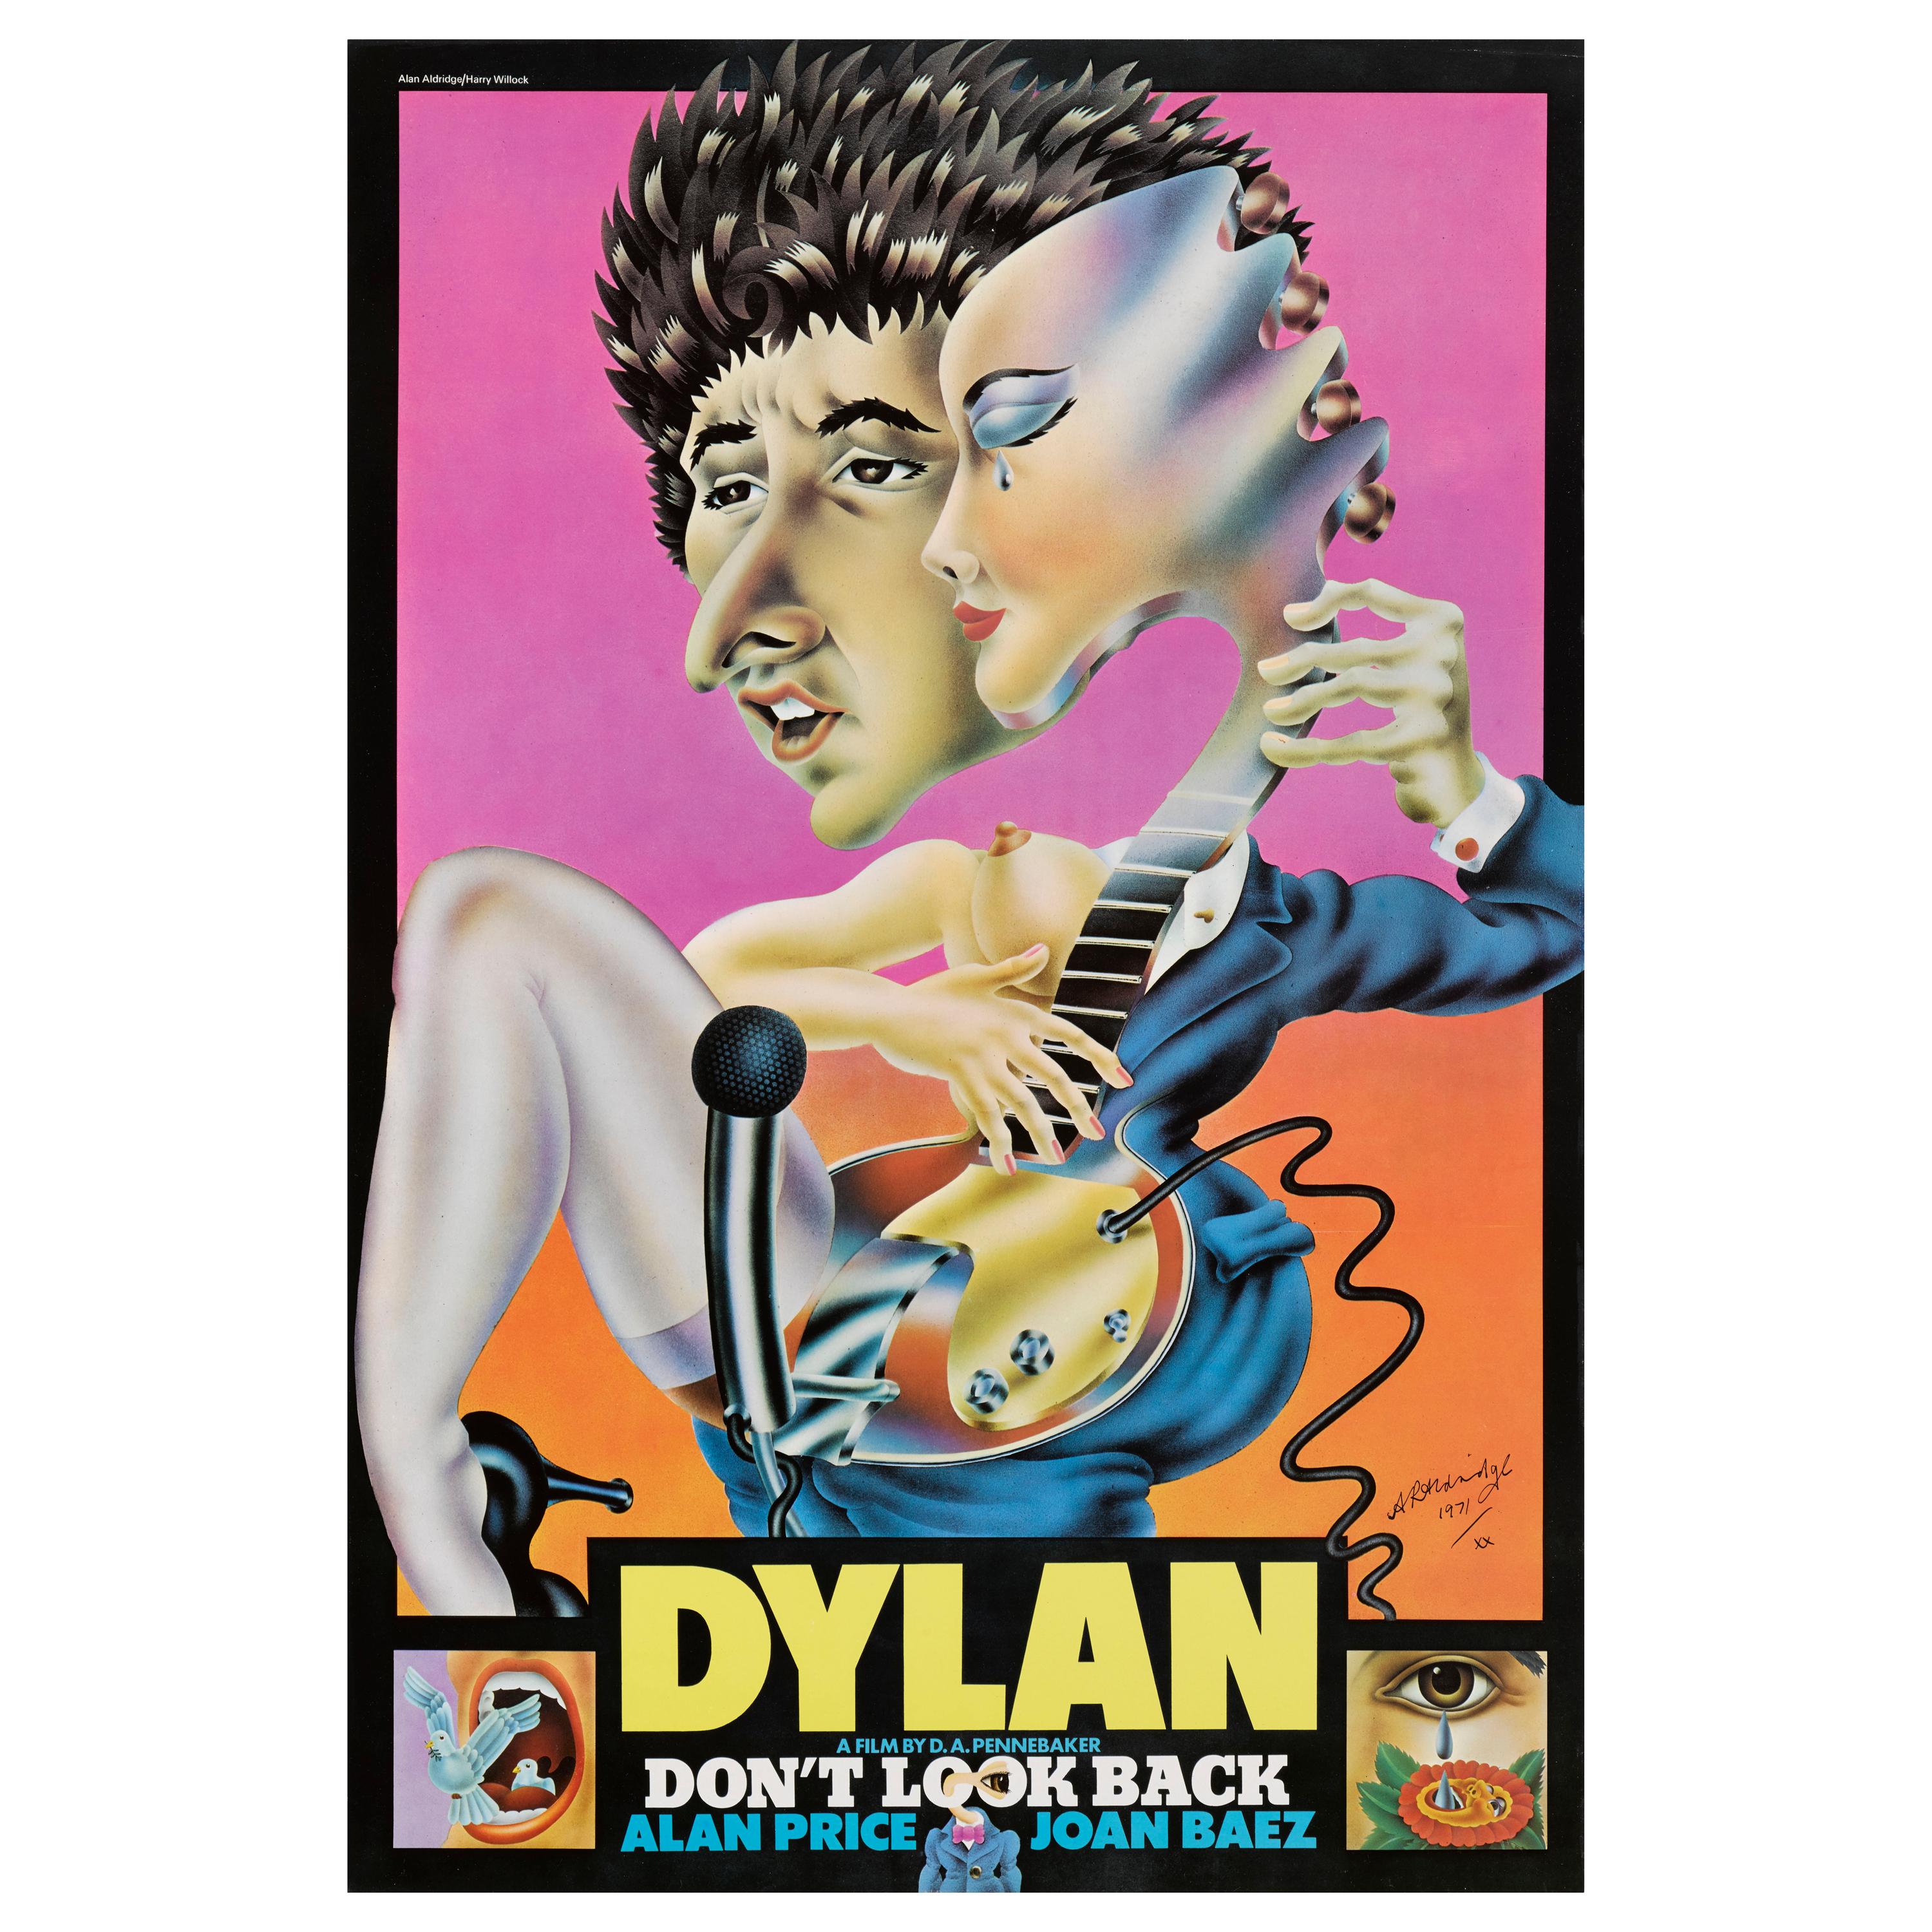 "Don't Look Back" Original British Film Poster